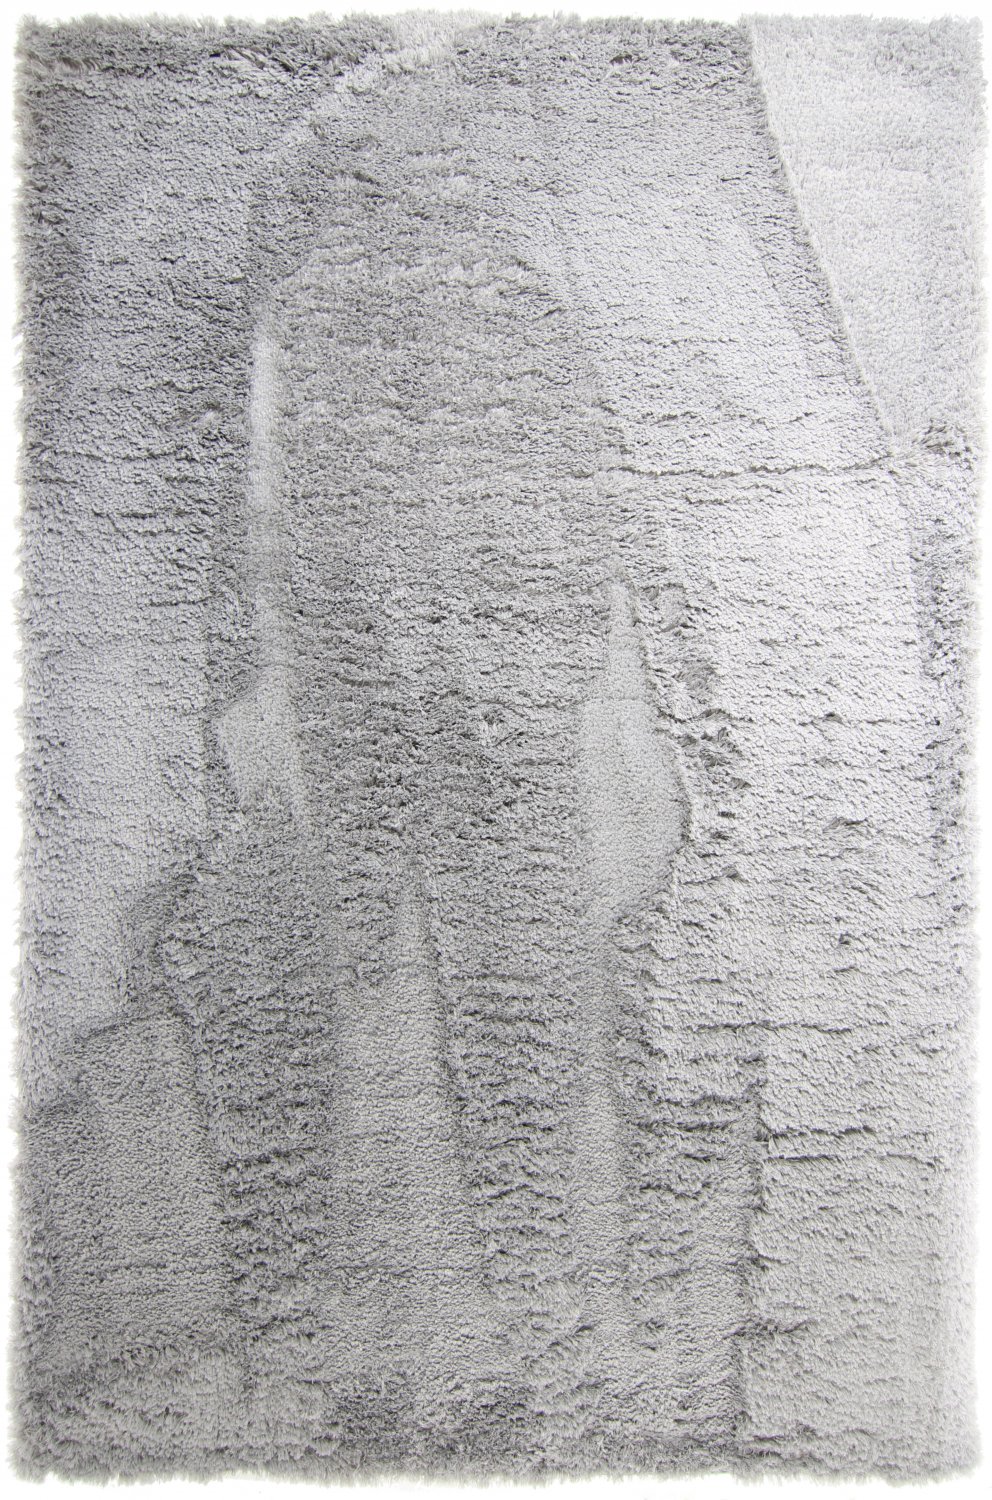 Ryetepper - Kanvas (grå)